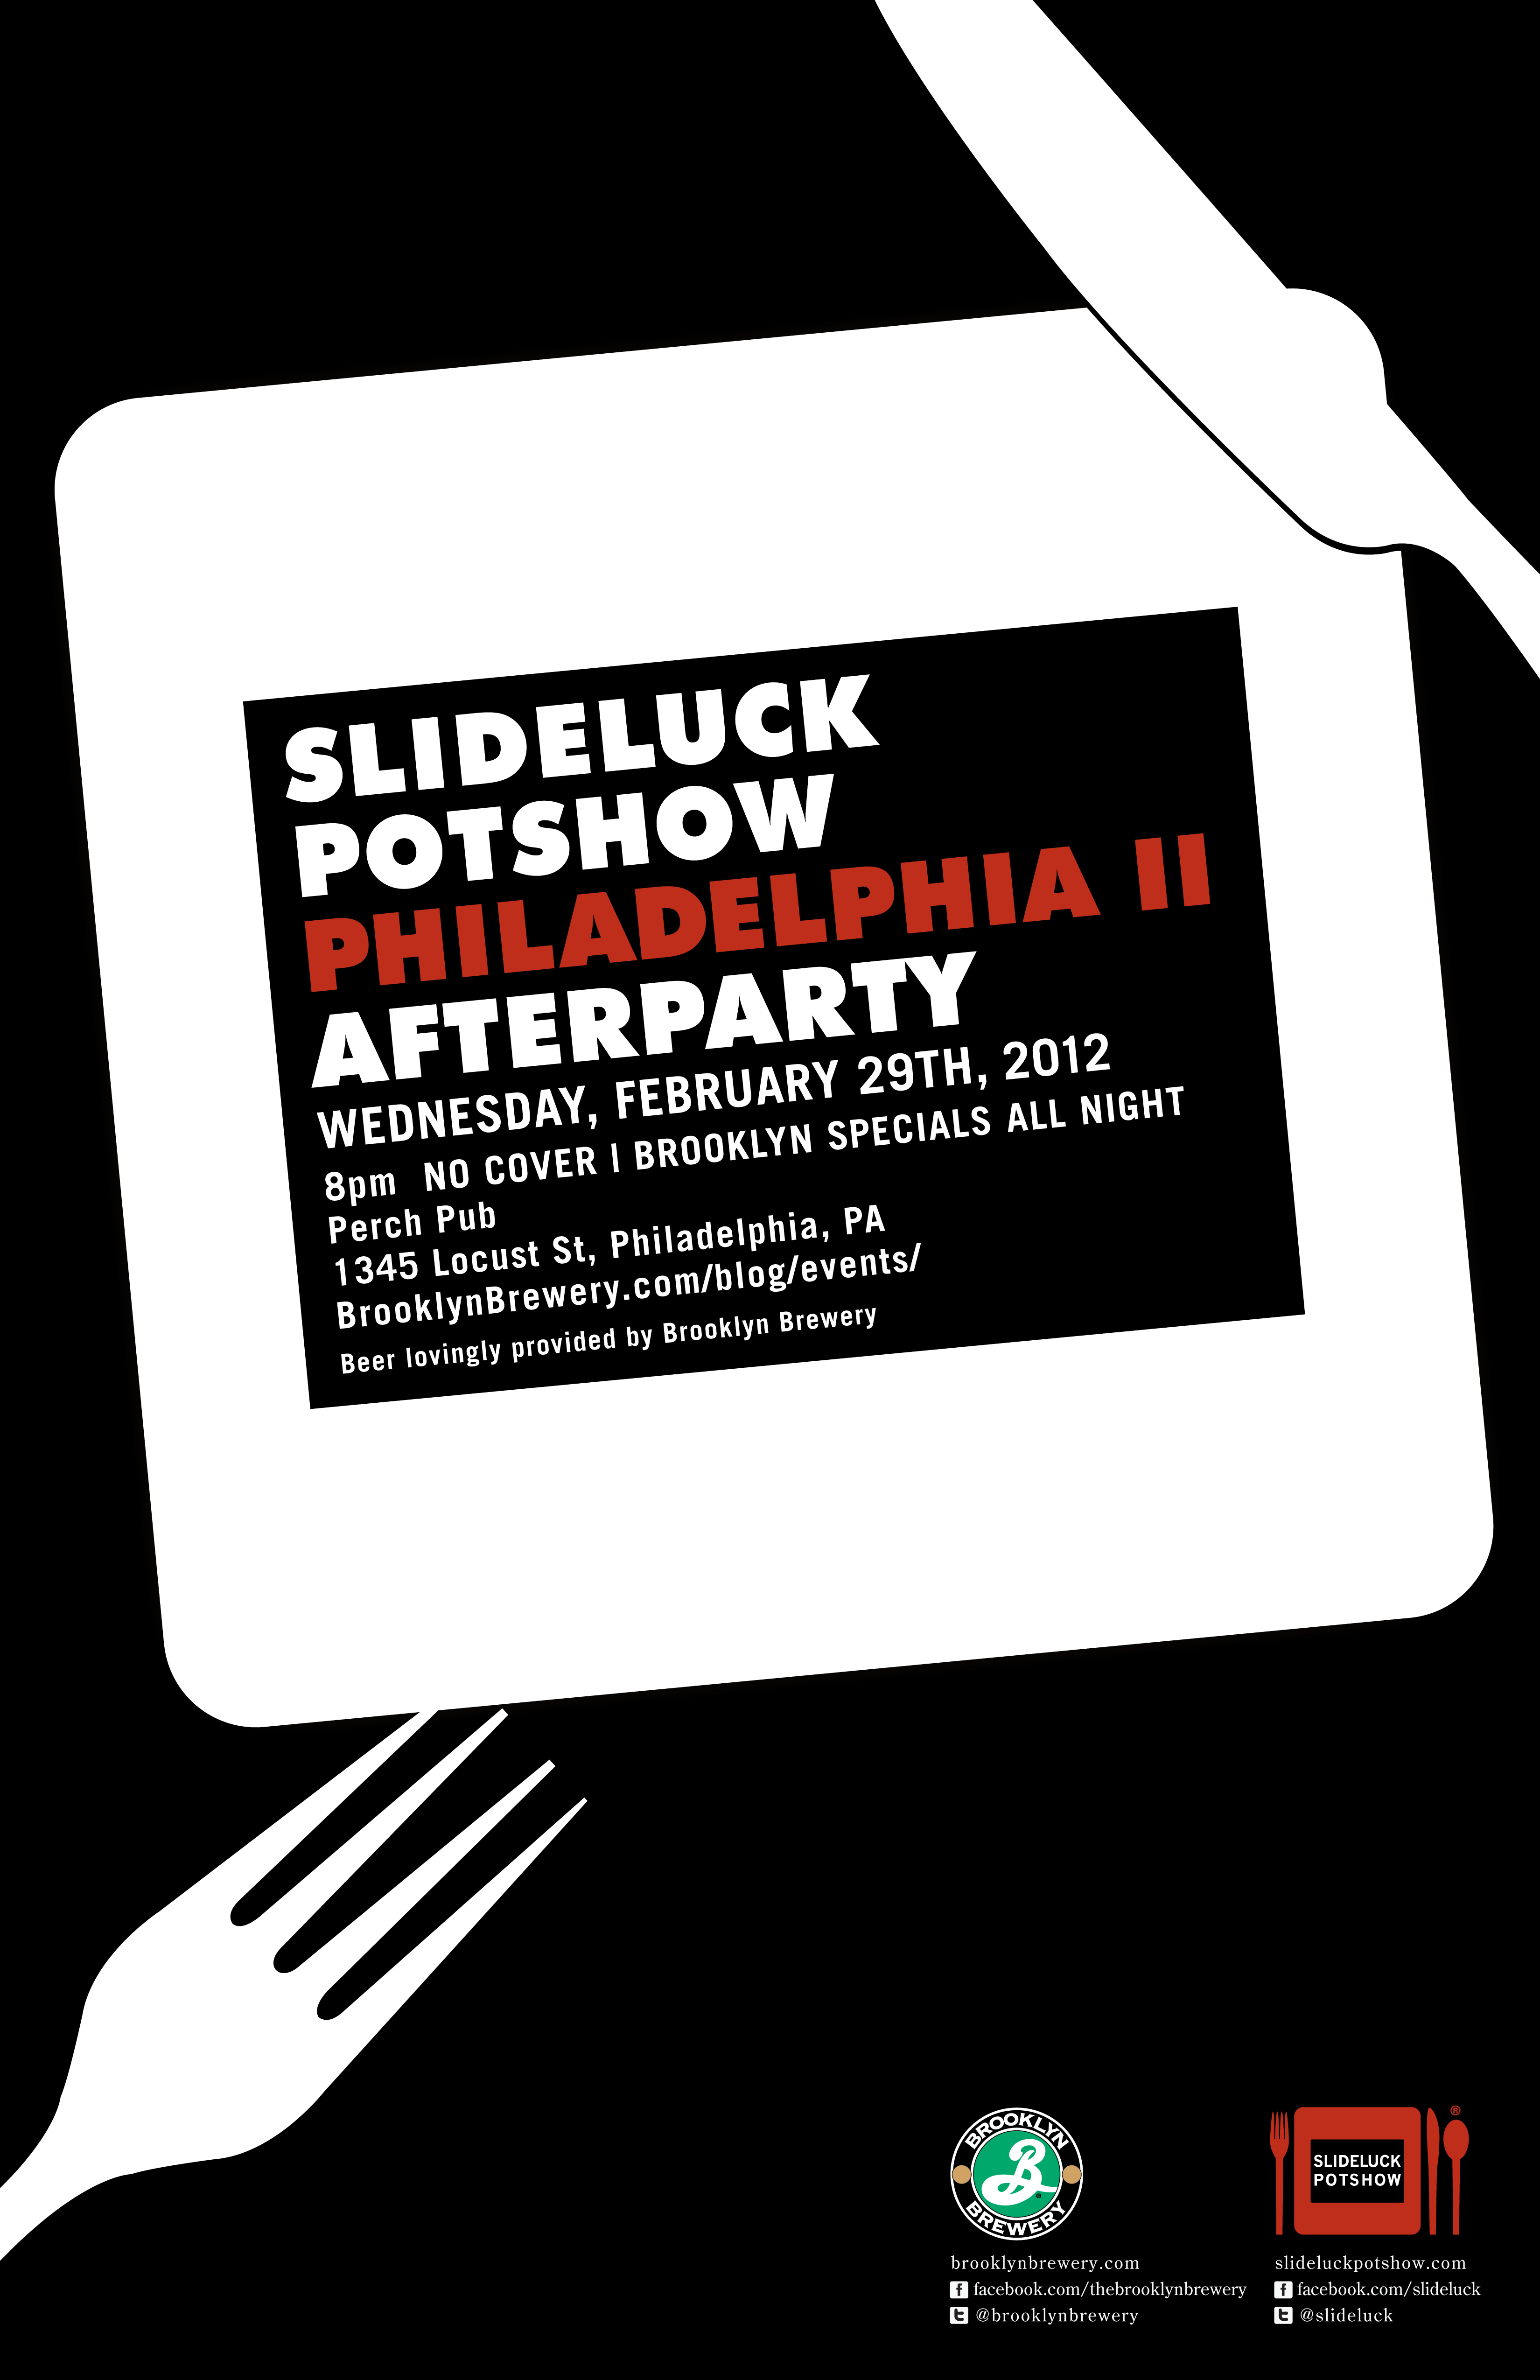 Slideluck Potshow Philadelphia II Afterparty